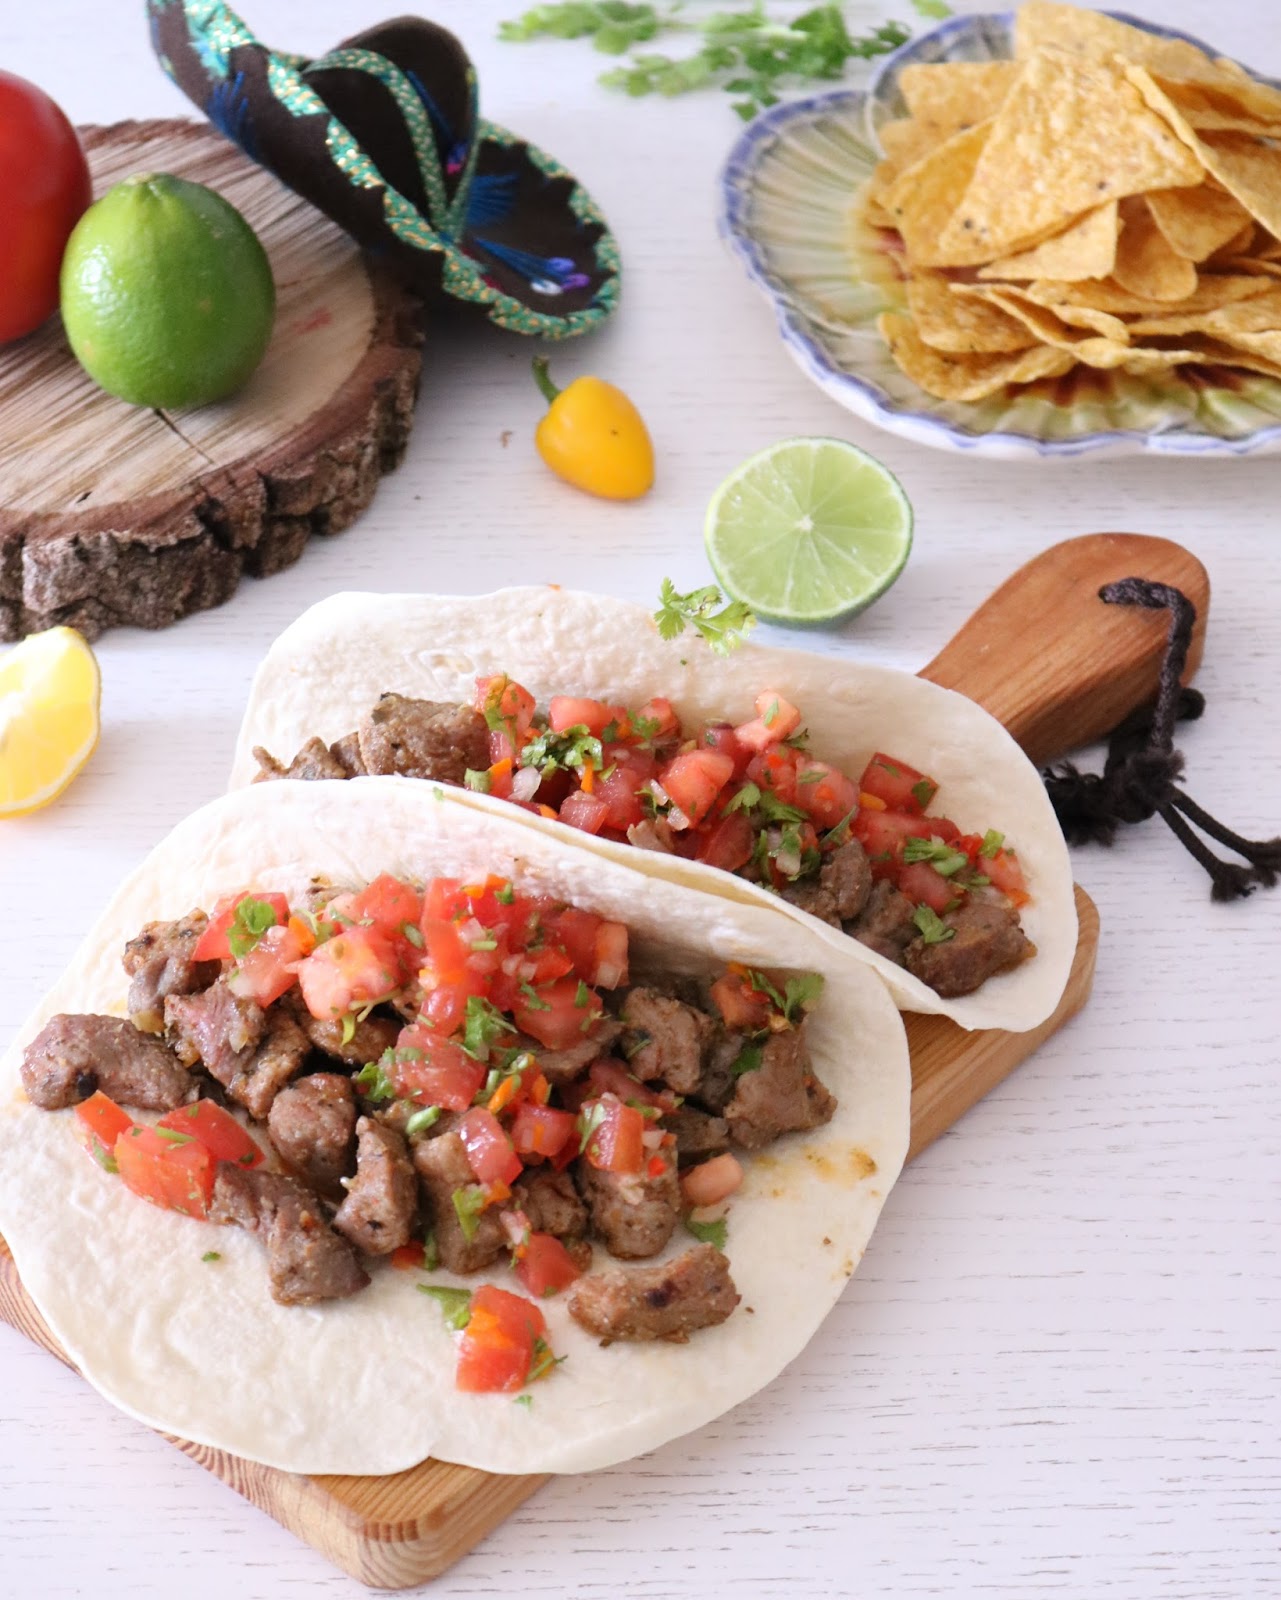 Nárwen's Cuisine: Tacos Mexicanos de Porco